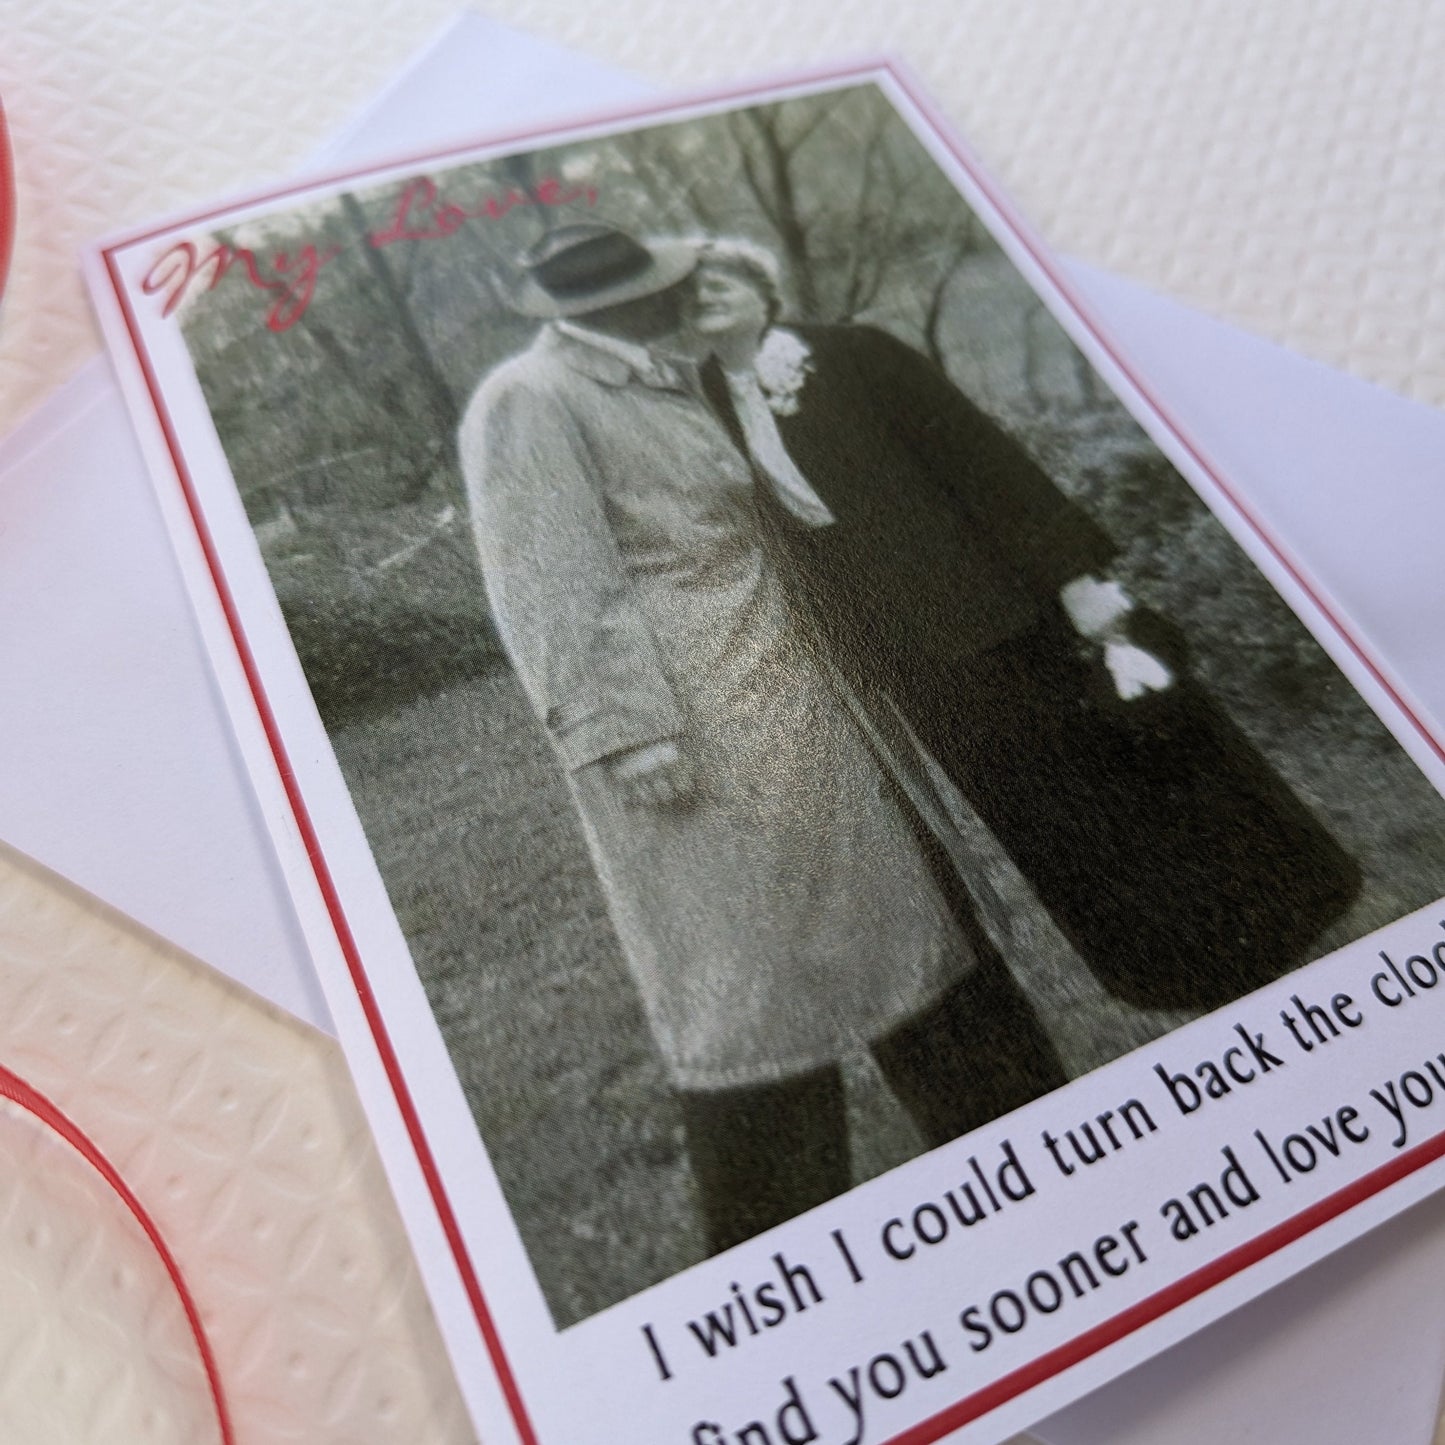 Find You Sooner and Love You Longer - Valentine Card